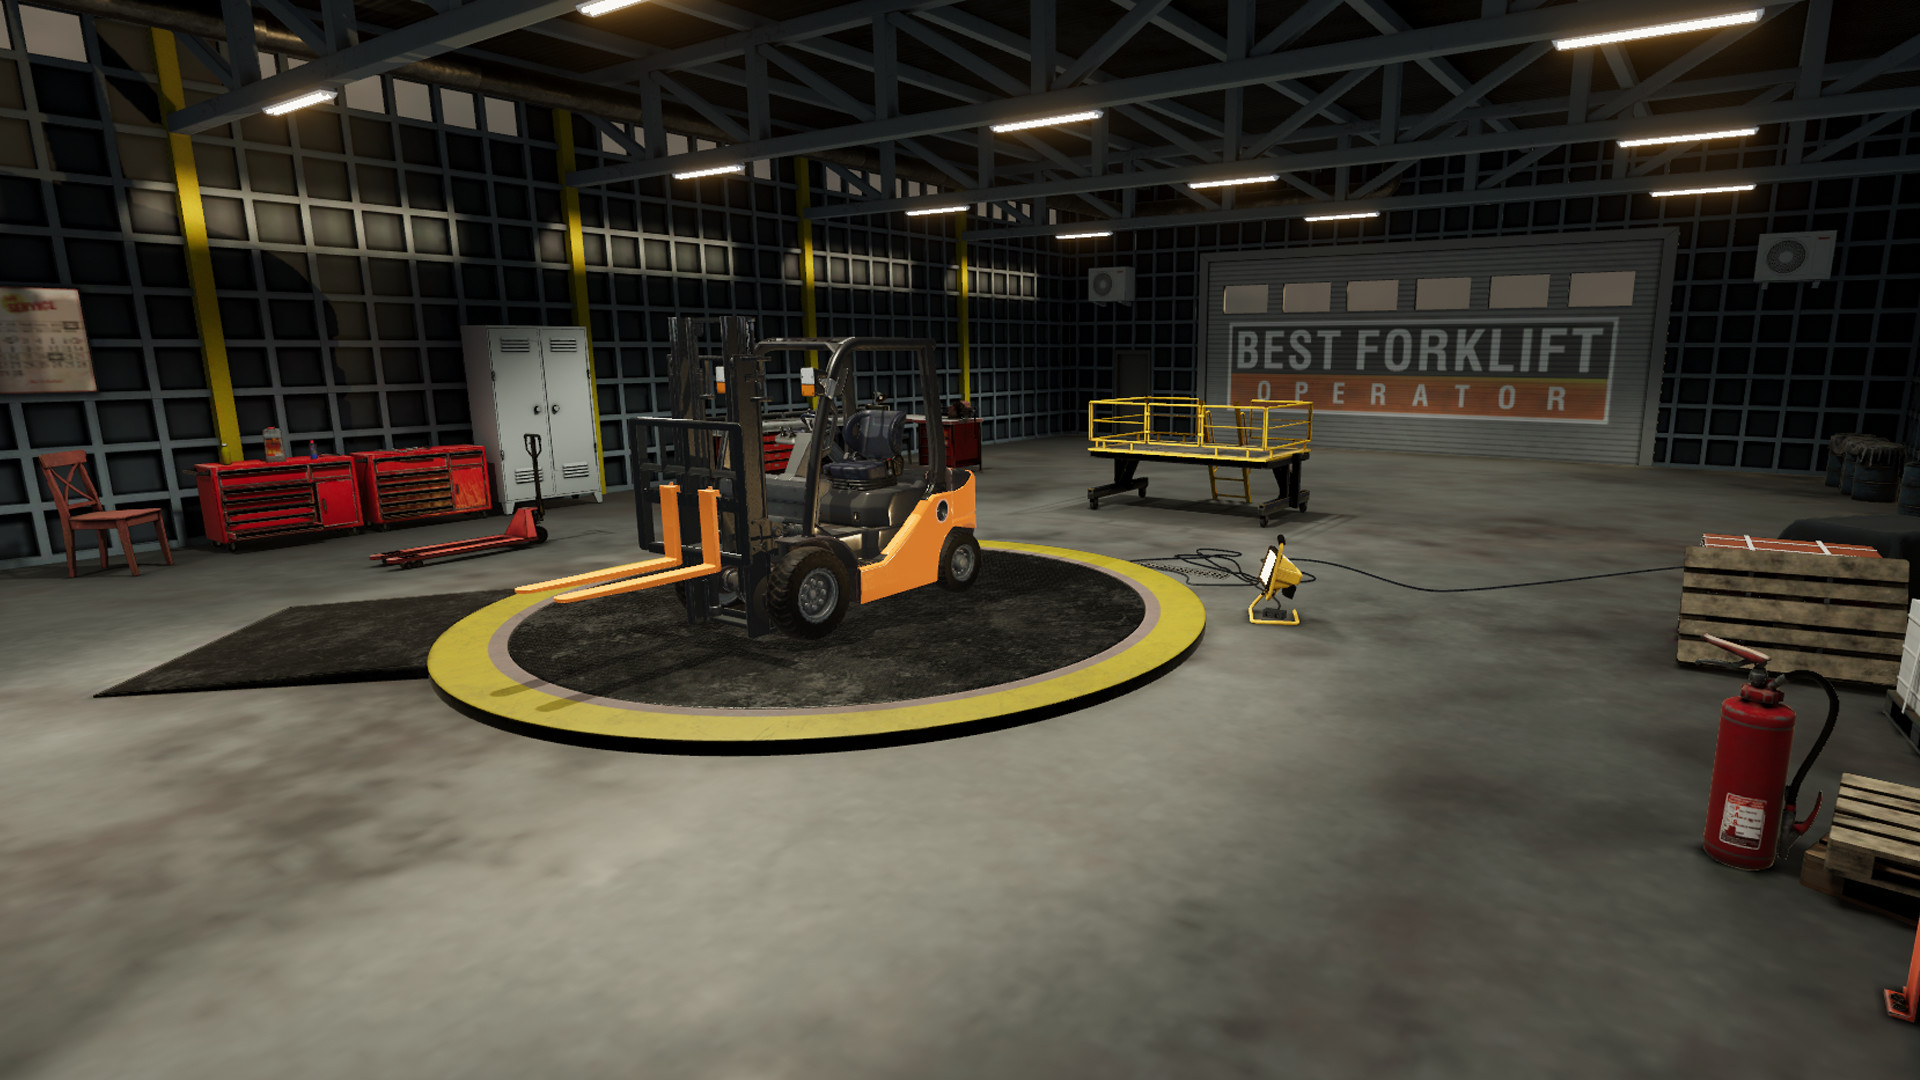 2333VR | 最佳叉车操作员 (Best Forklift Operator VR)